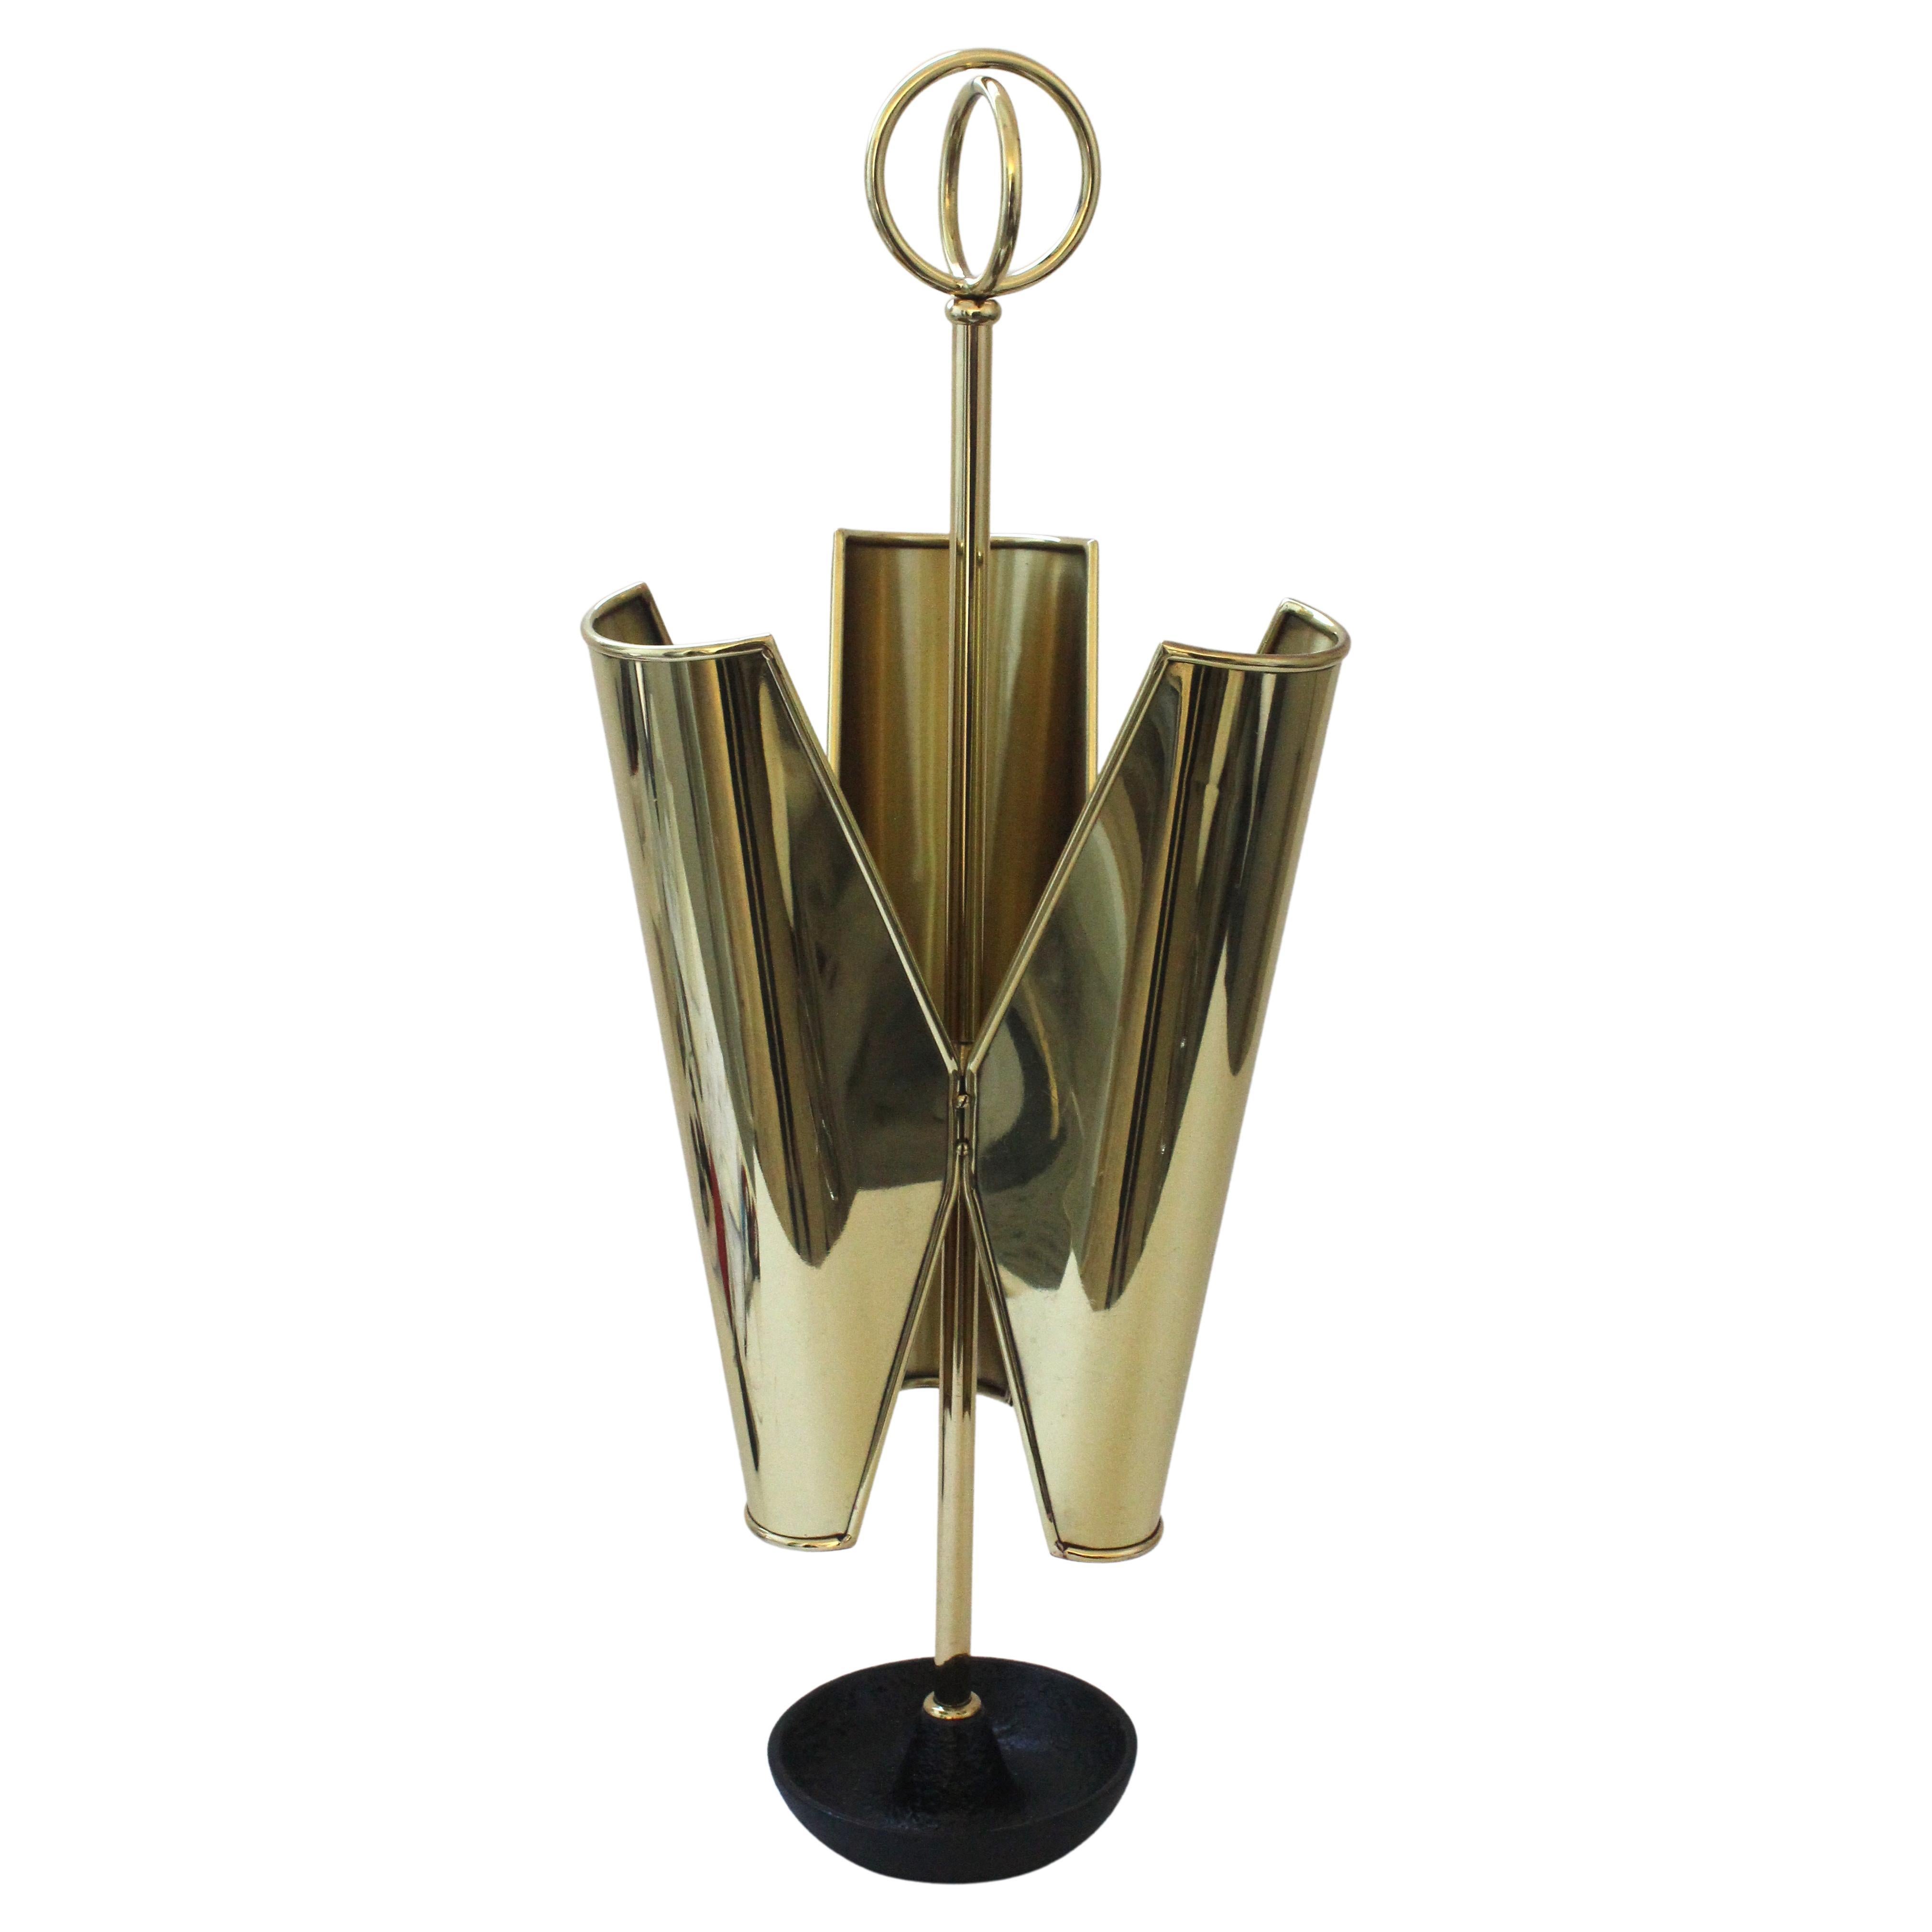 Trefoil Form Brass Umbrella Holder